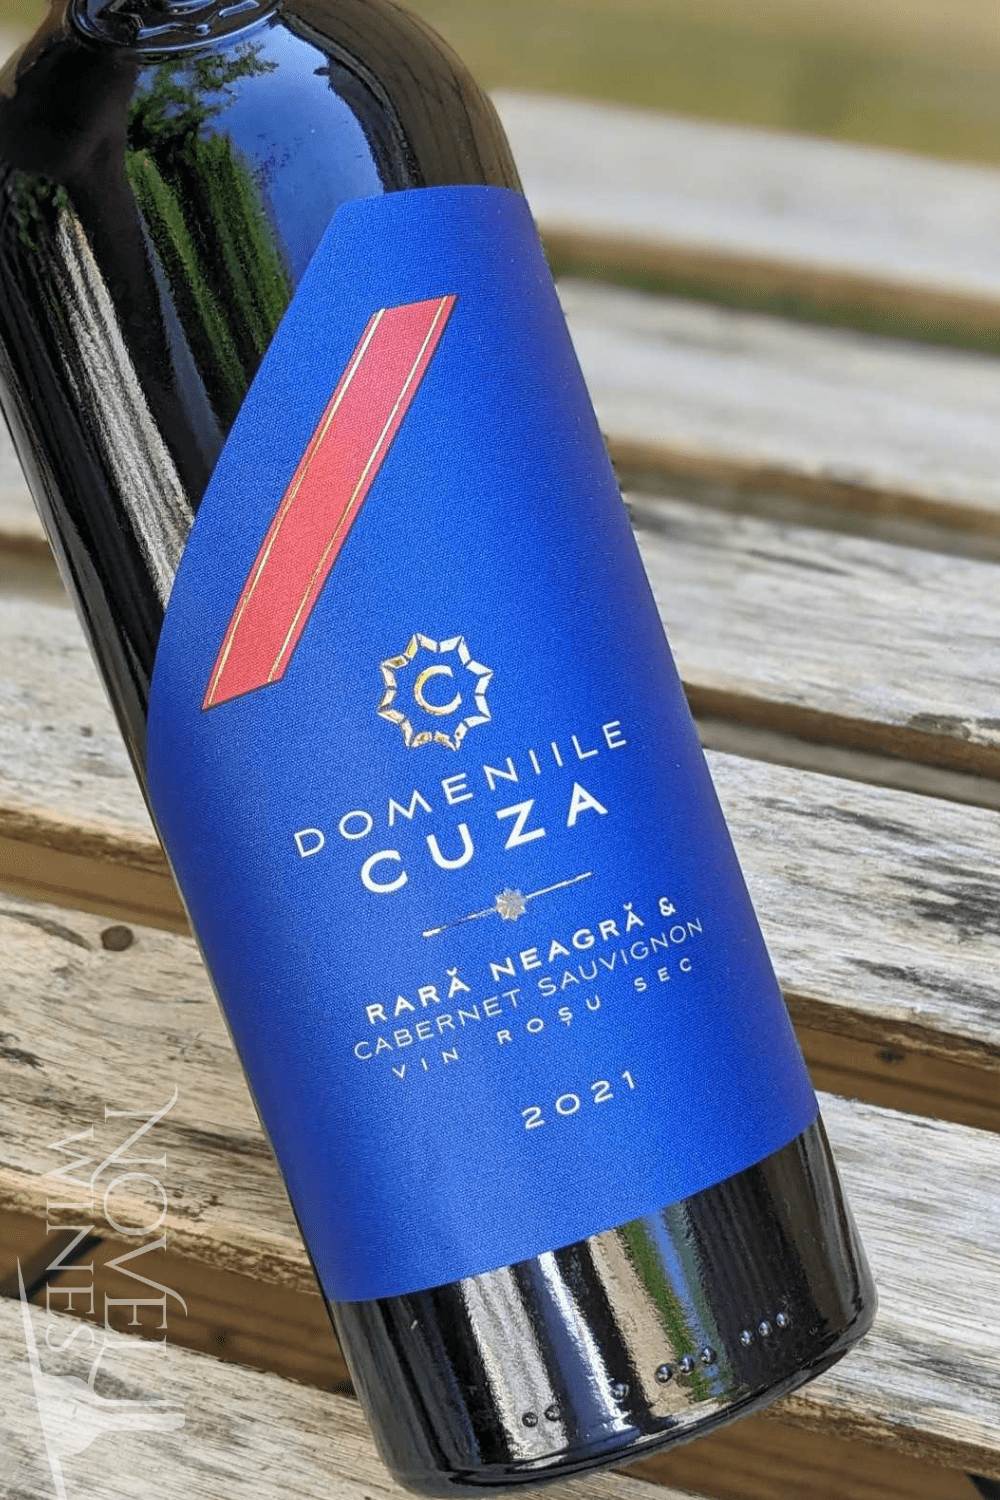 Chateau Purcari Red Wine Domeniile Cuza Rara Neagra & Cabernet Sauvignon 2019, Moldova